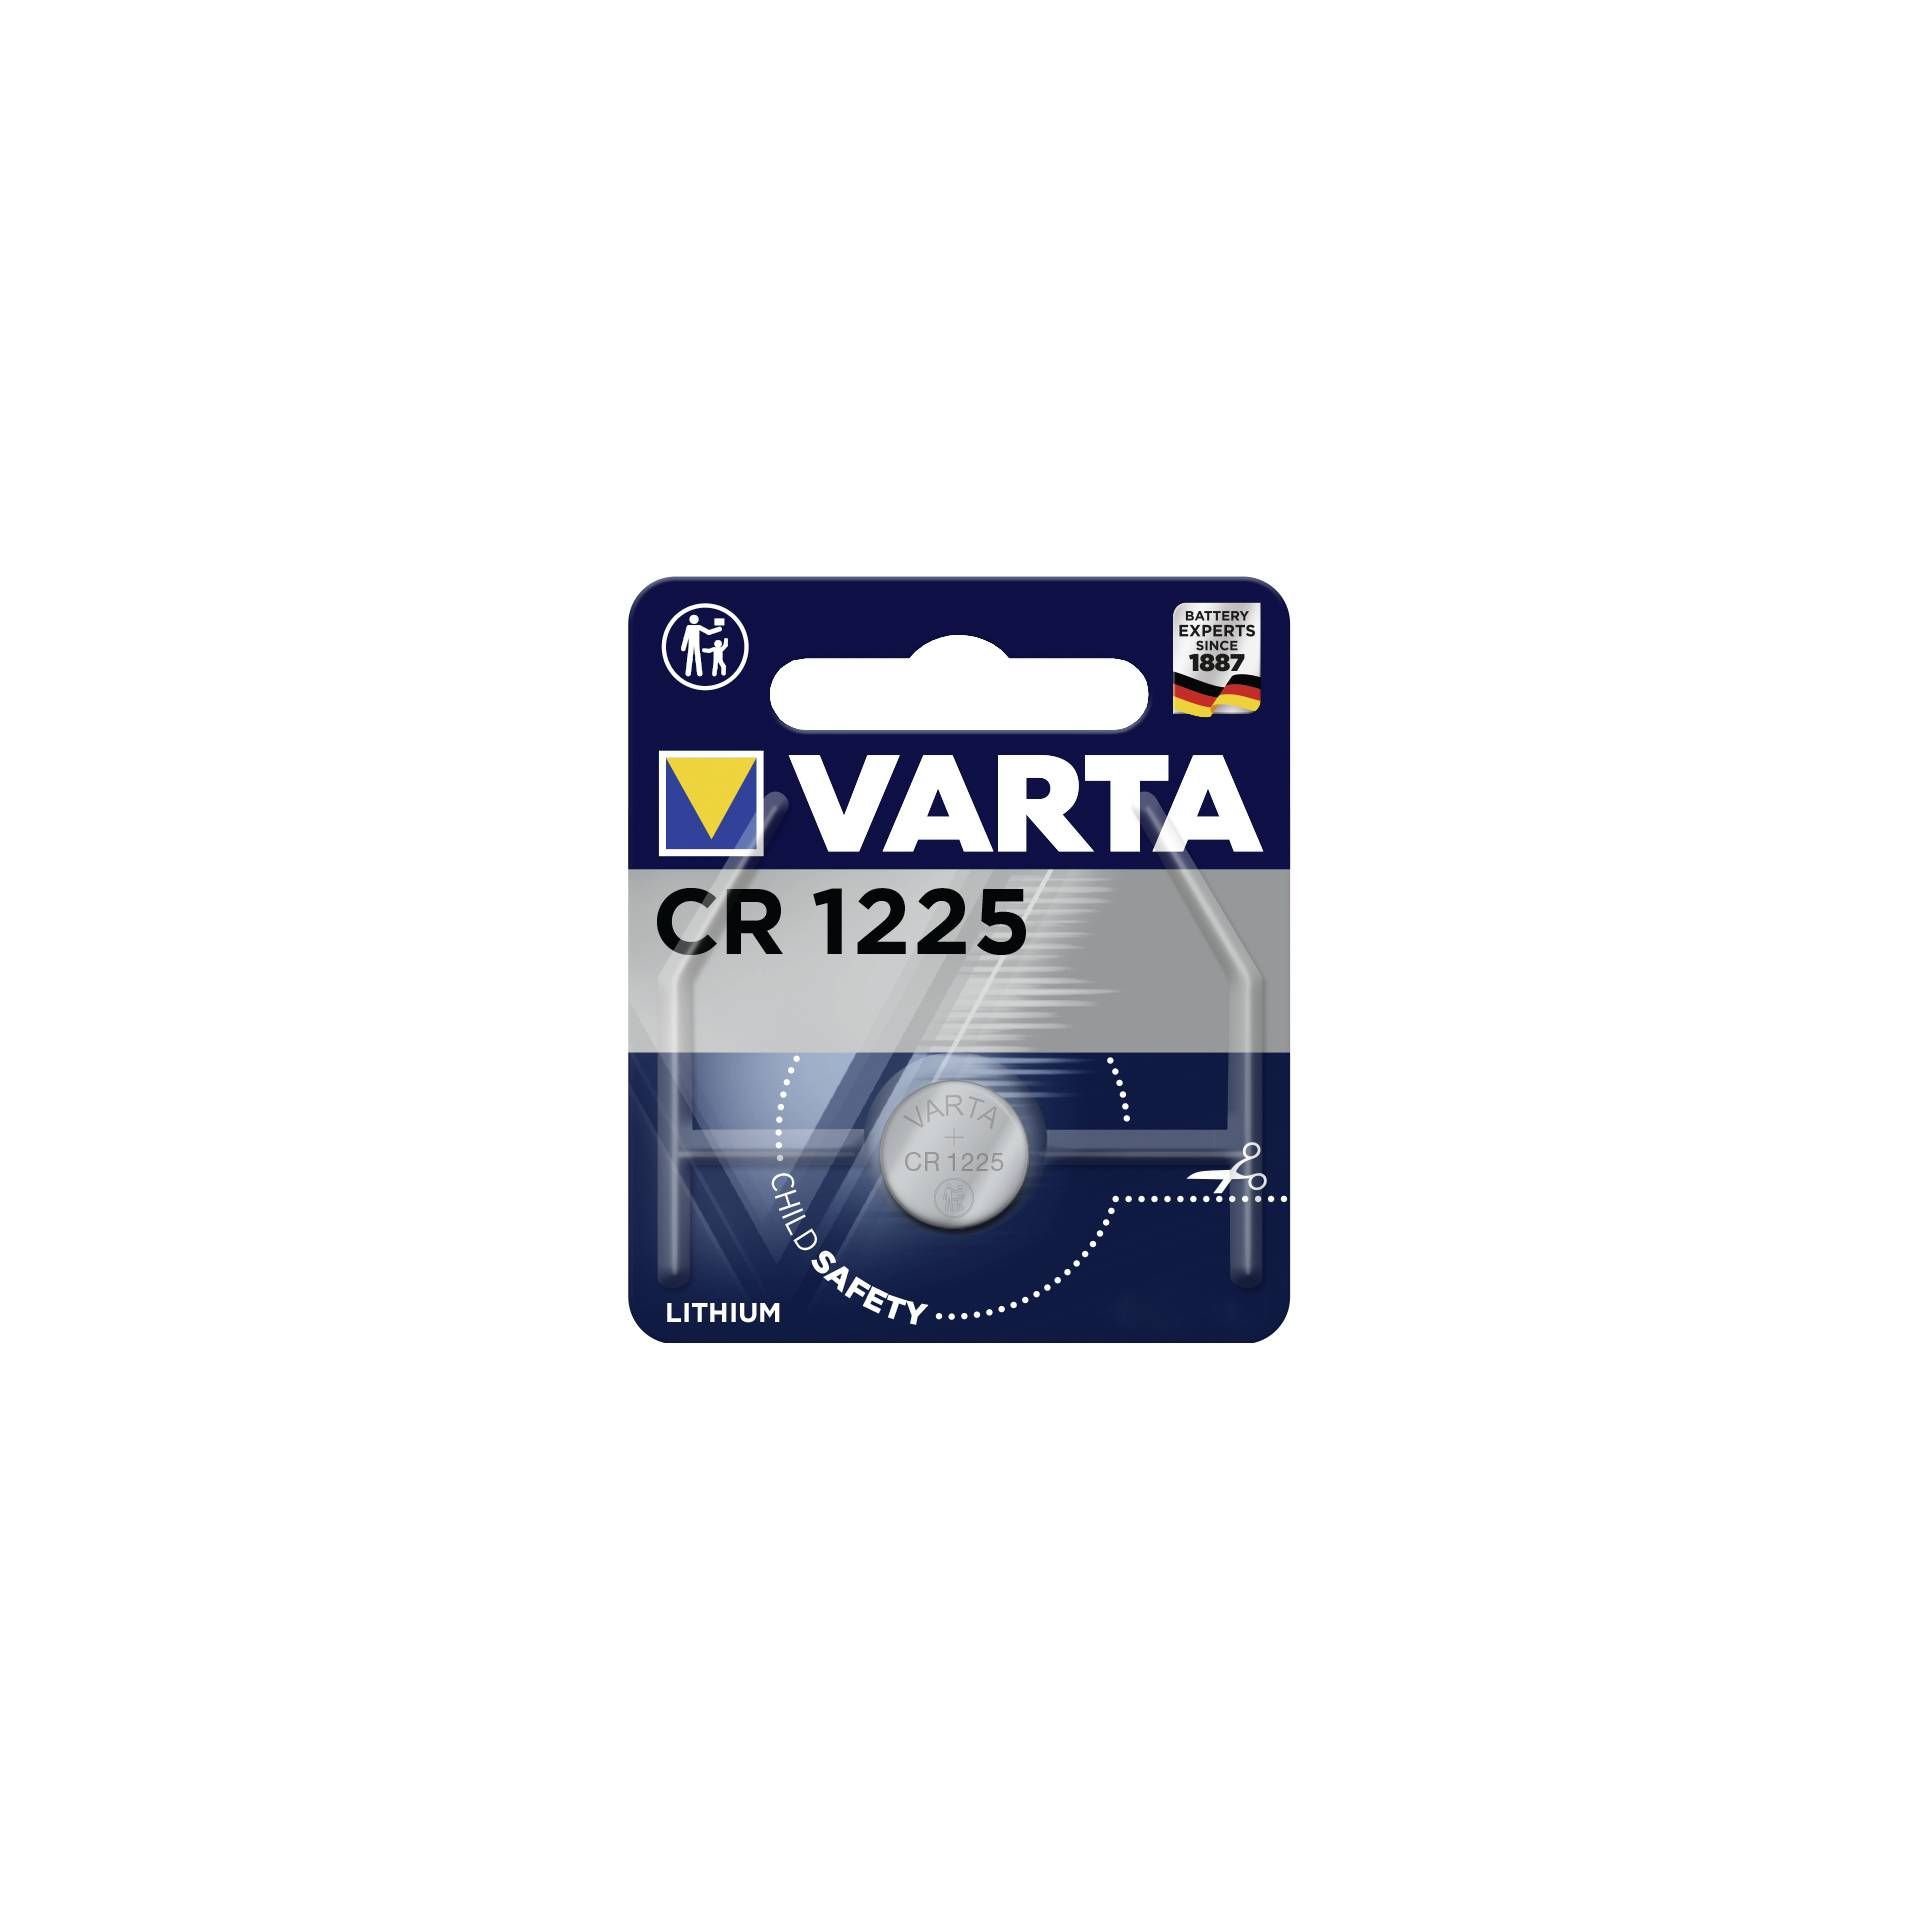 1 Varta electronic CR 1225